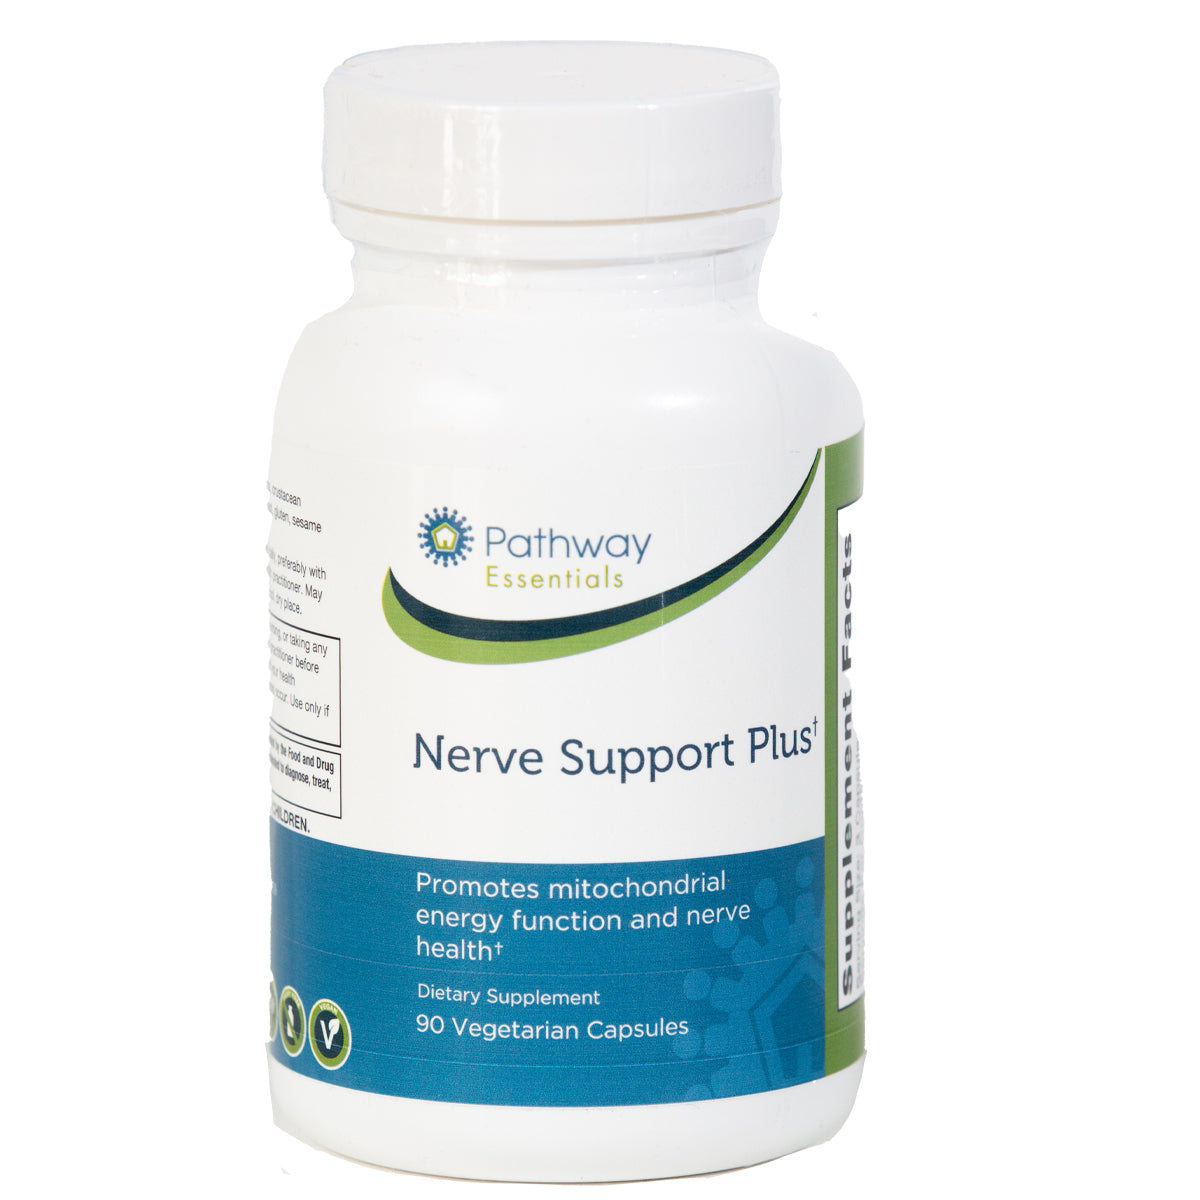 Nerve Support Plus